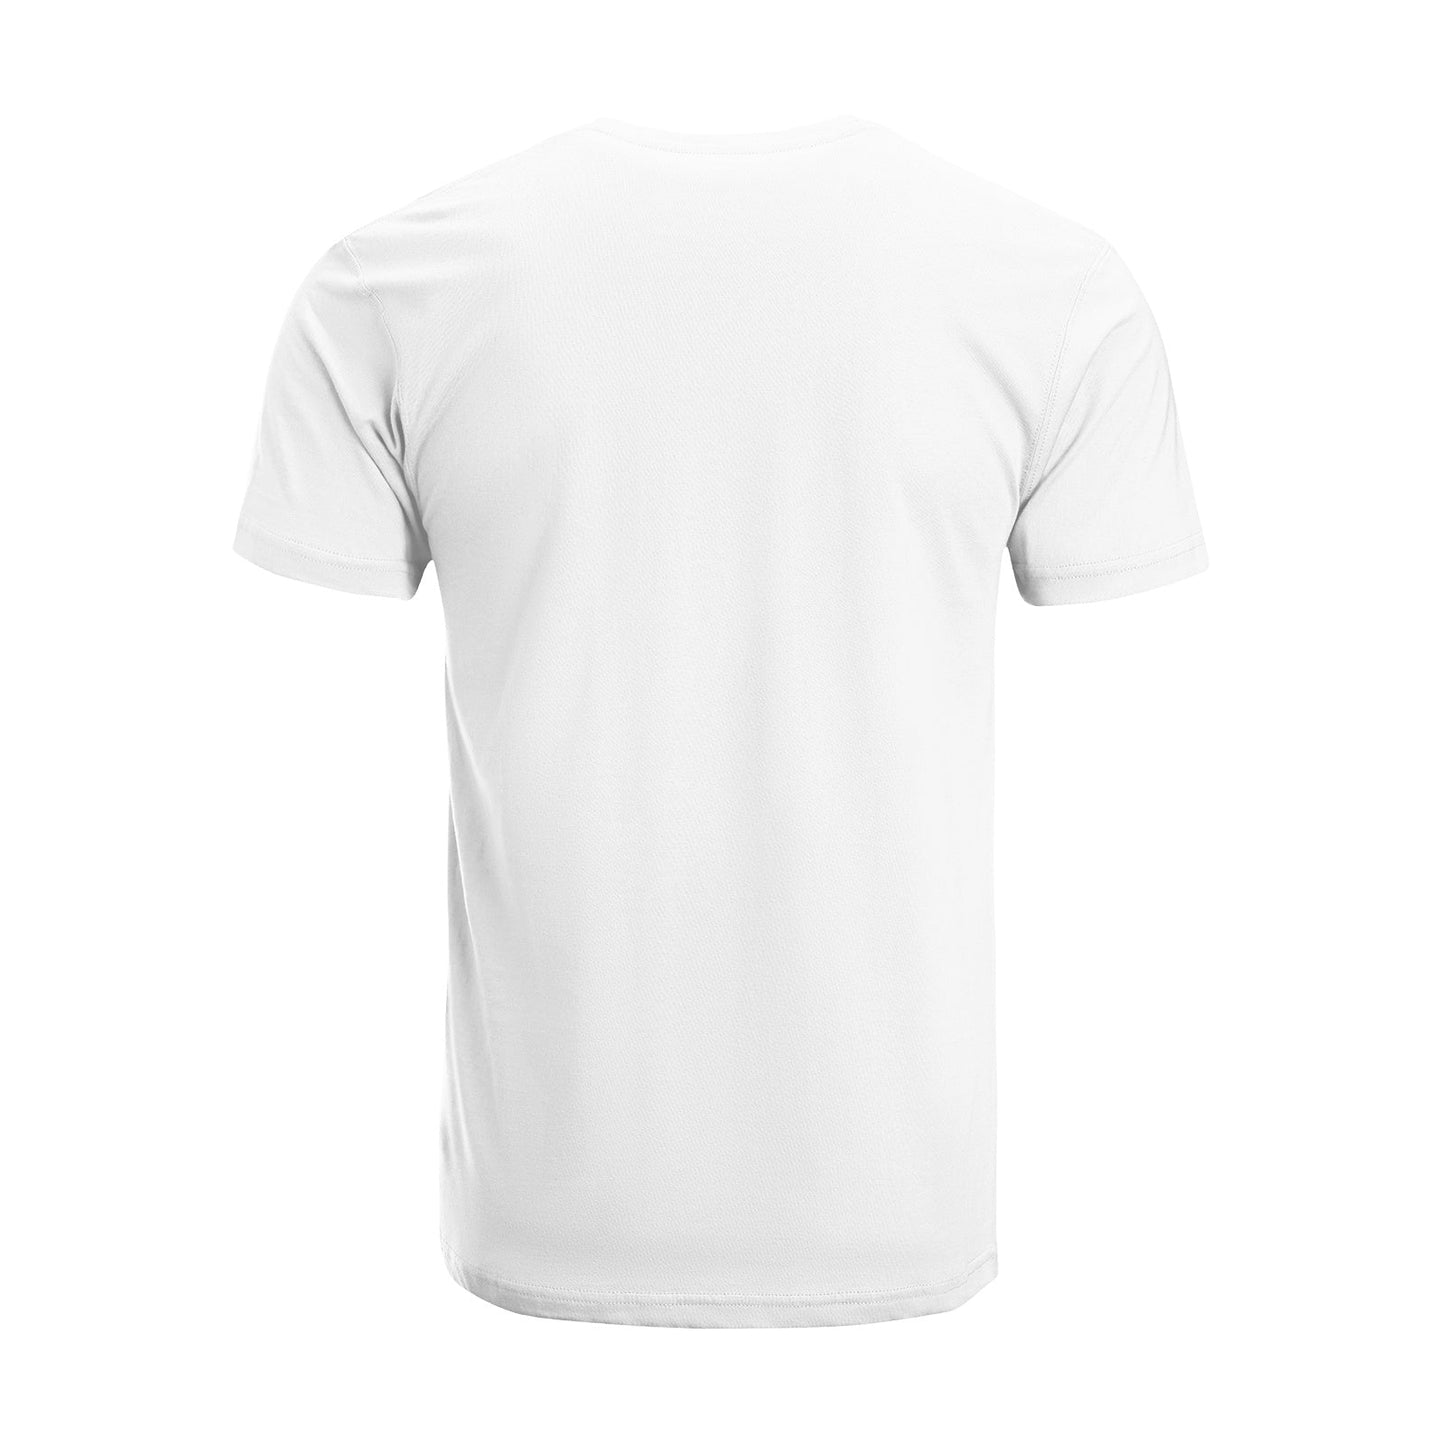 Unisex Short Sleeve Crew Neck Cotton Jersey T-Shirt MOM 40